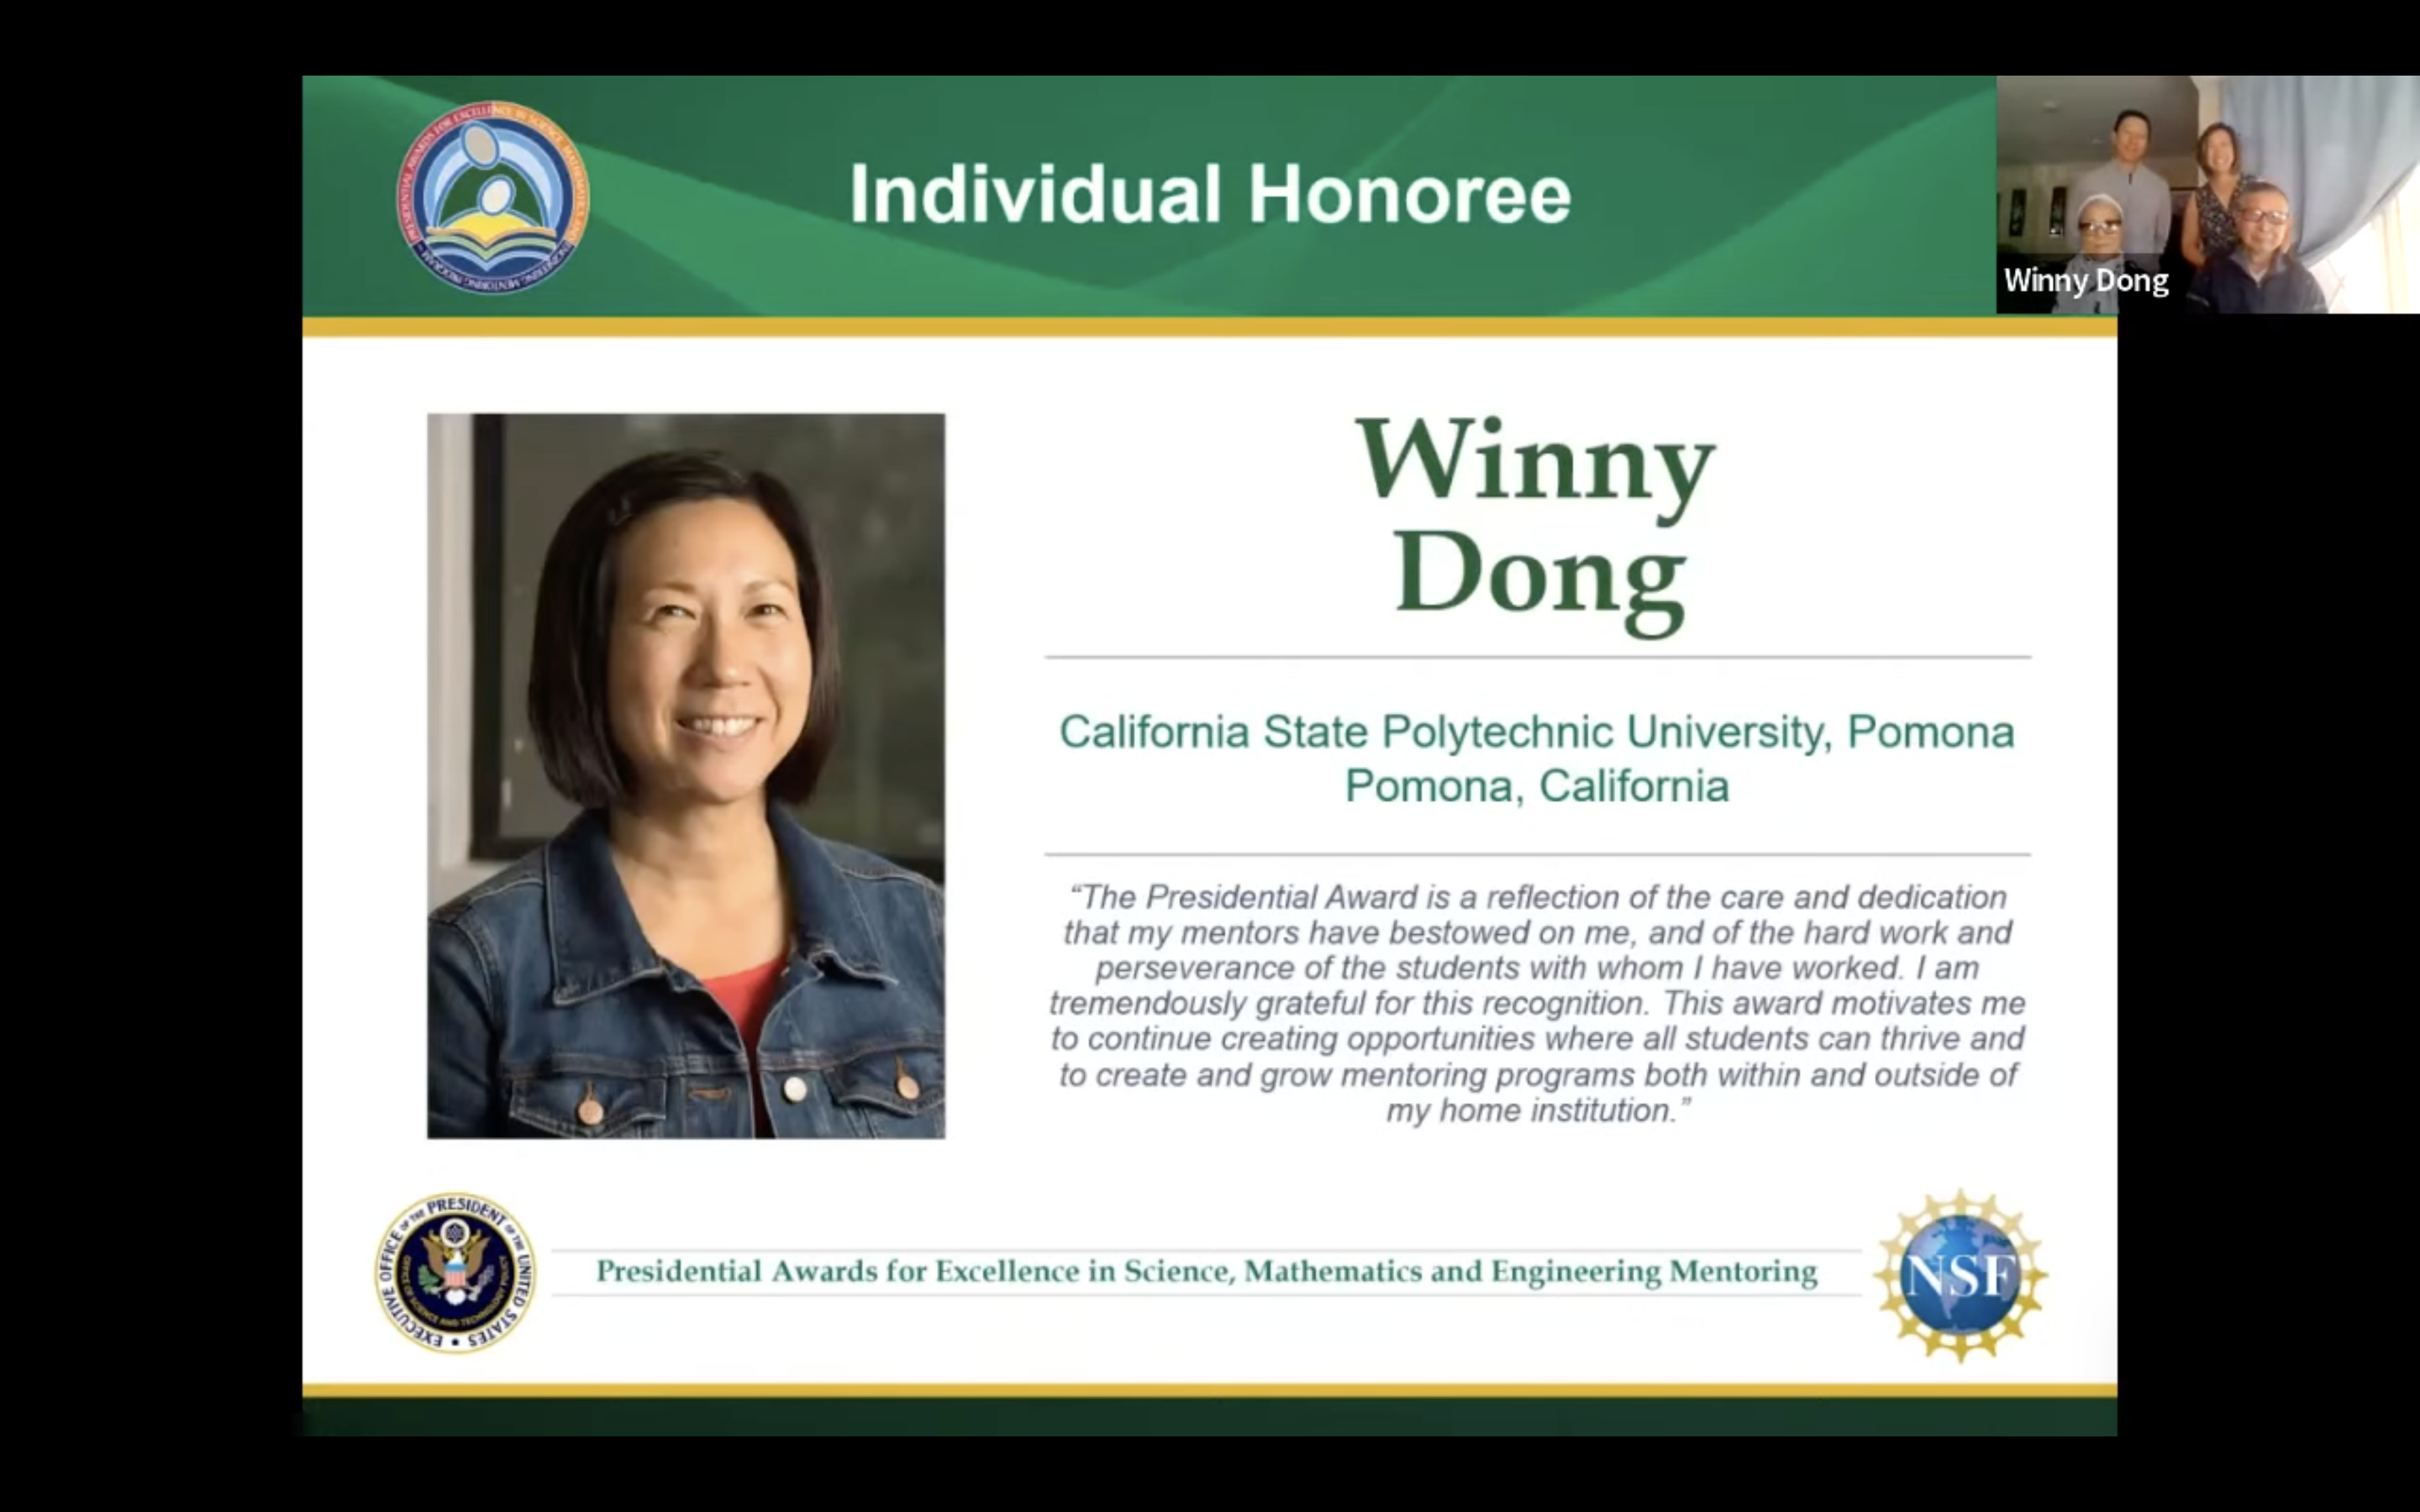 Winny Dong receiving award through zoom